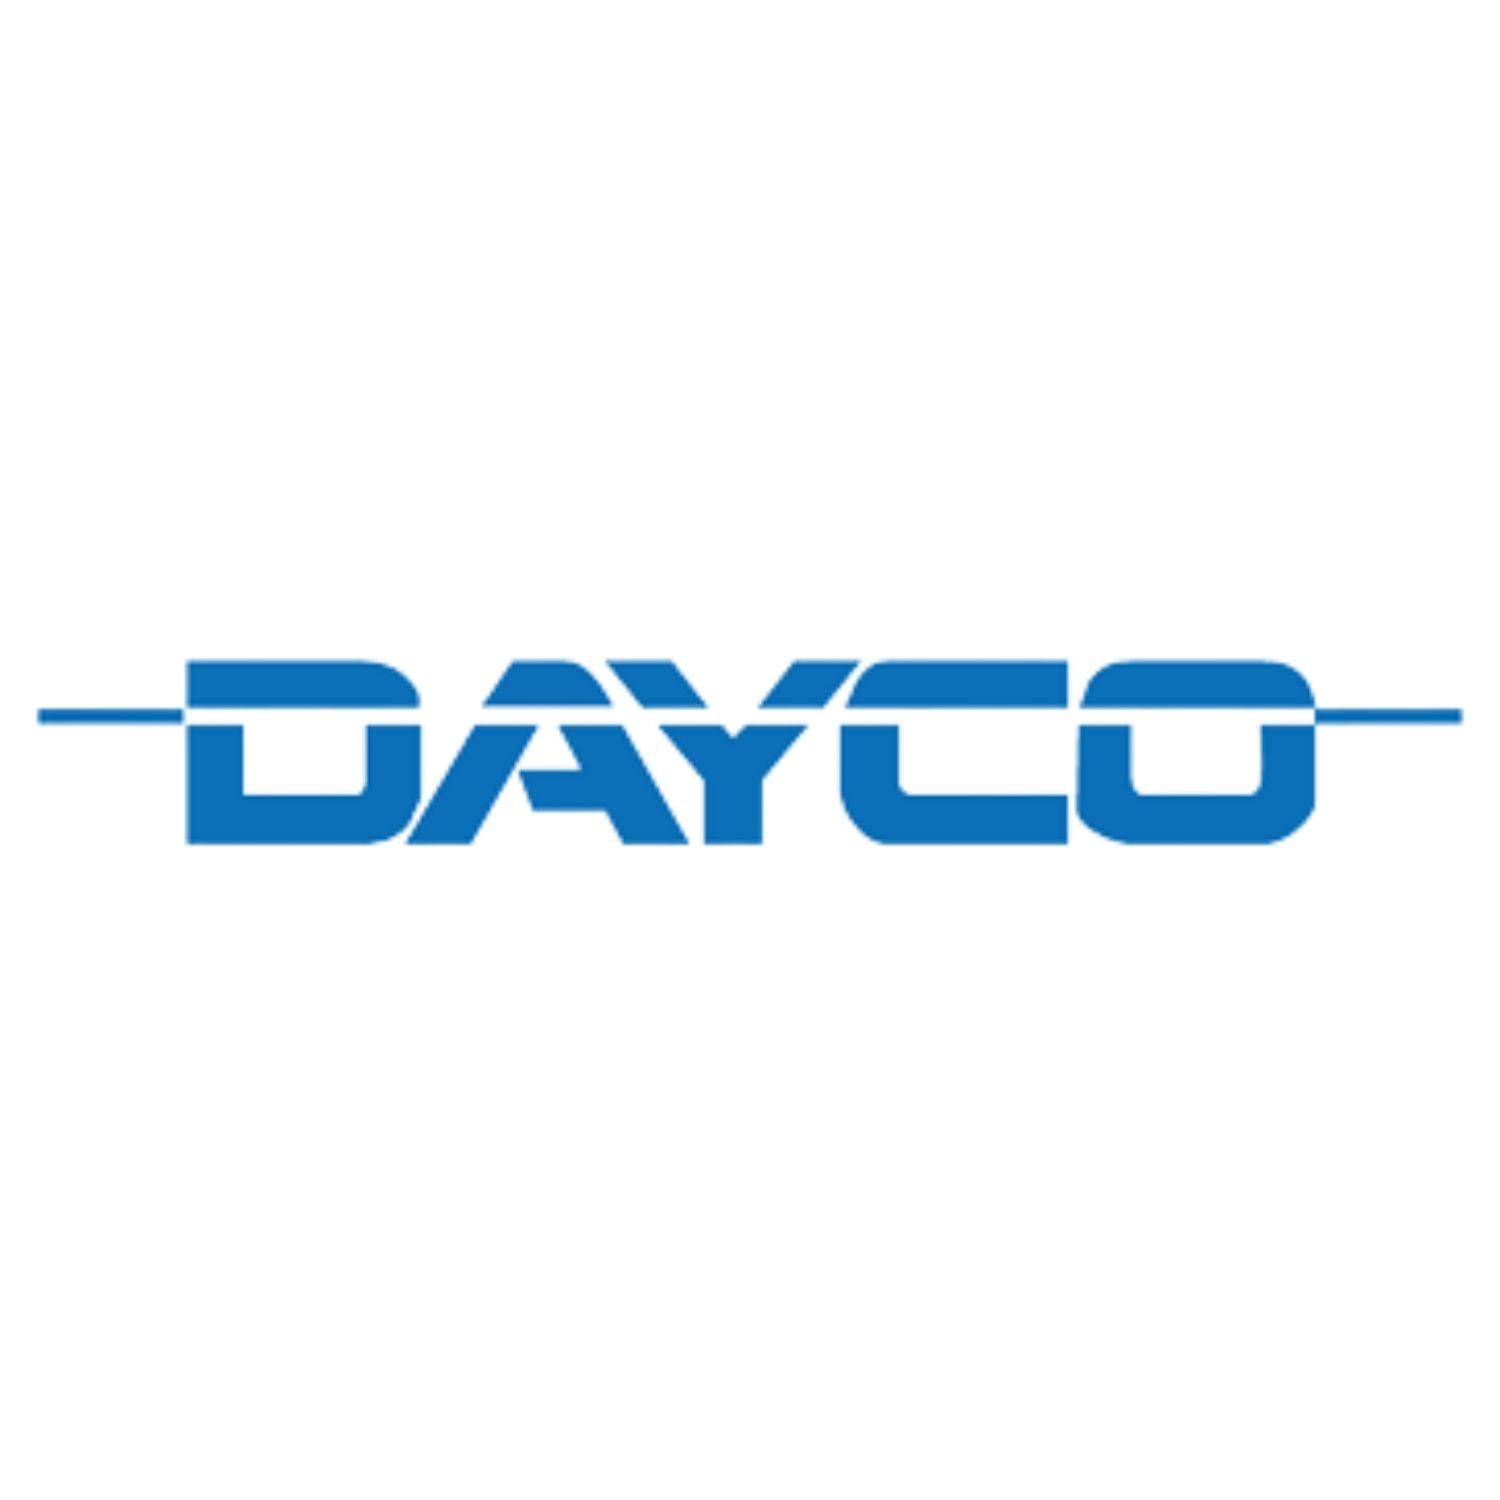 Dayco Belts